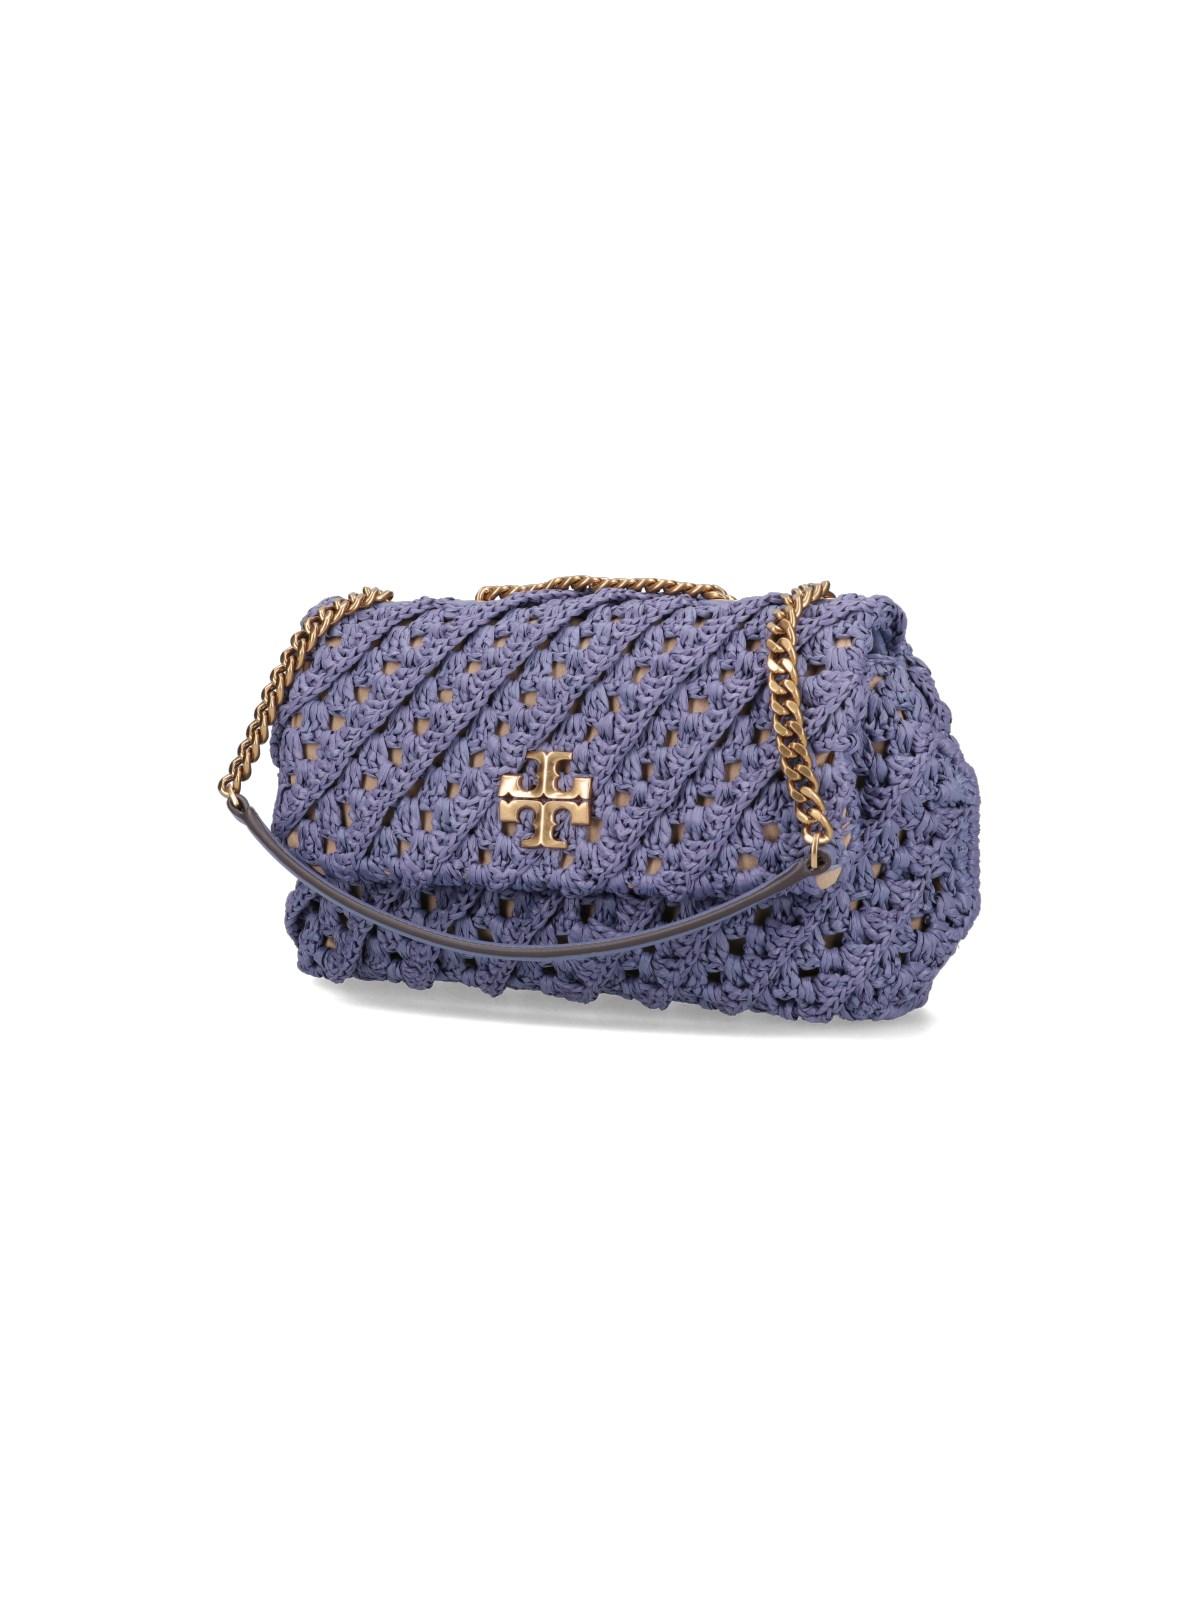 Tory Burch 'kira' Small Crochet Bag in Blue